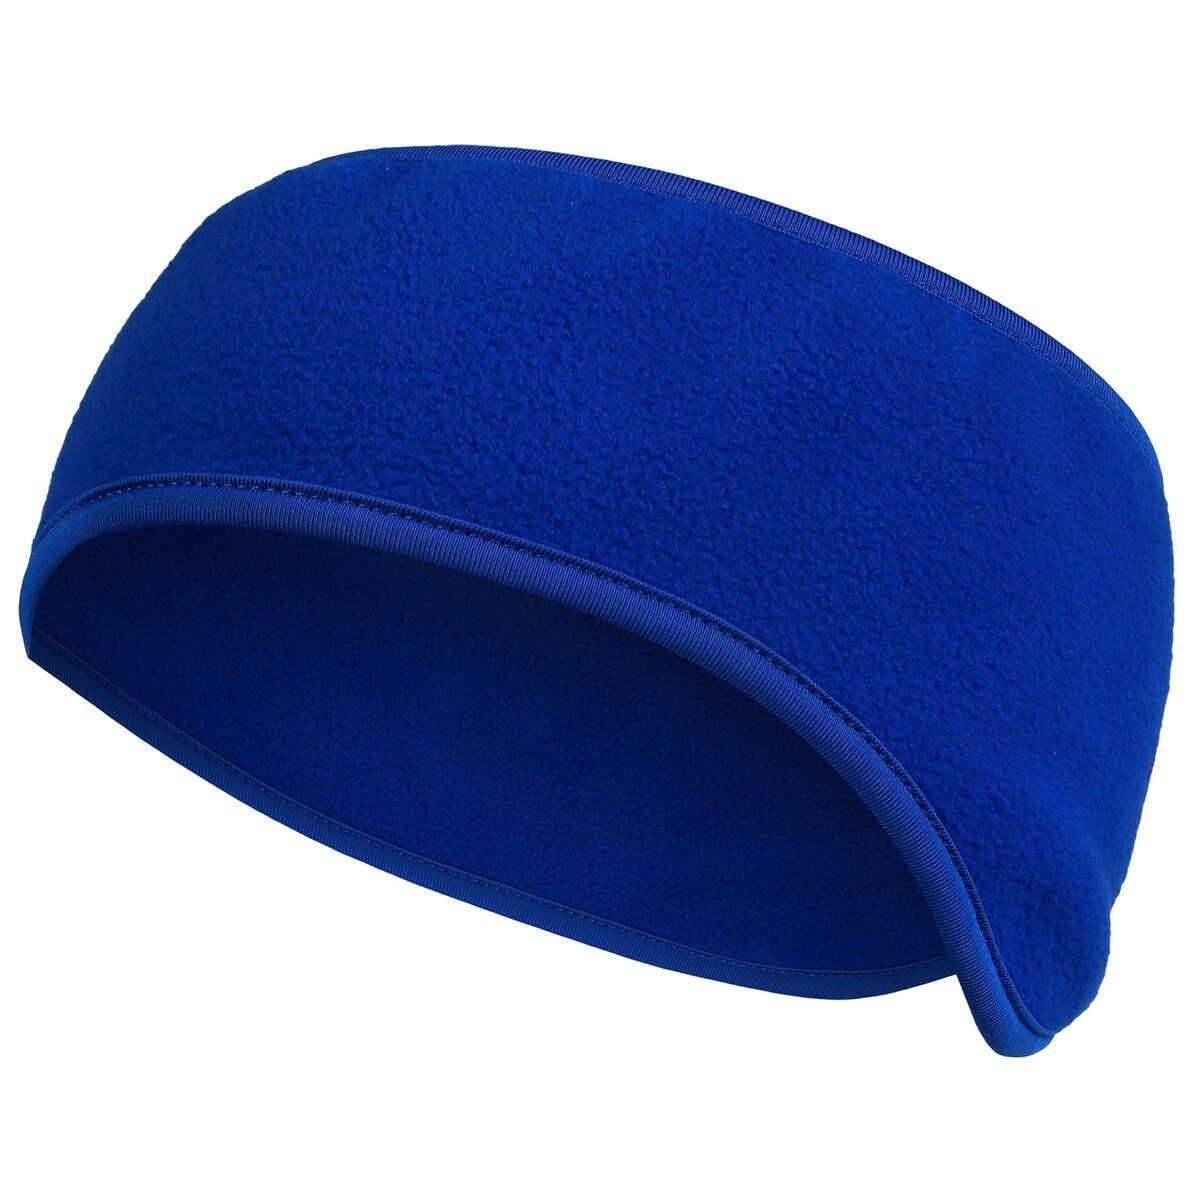 Повязка на голову onlytop, обхват 50-61 см, цвет синий повязка на голову